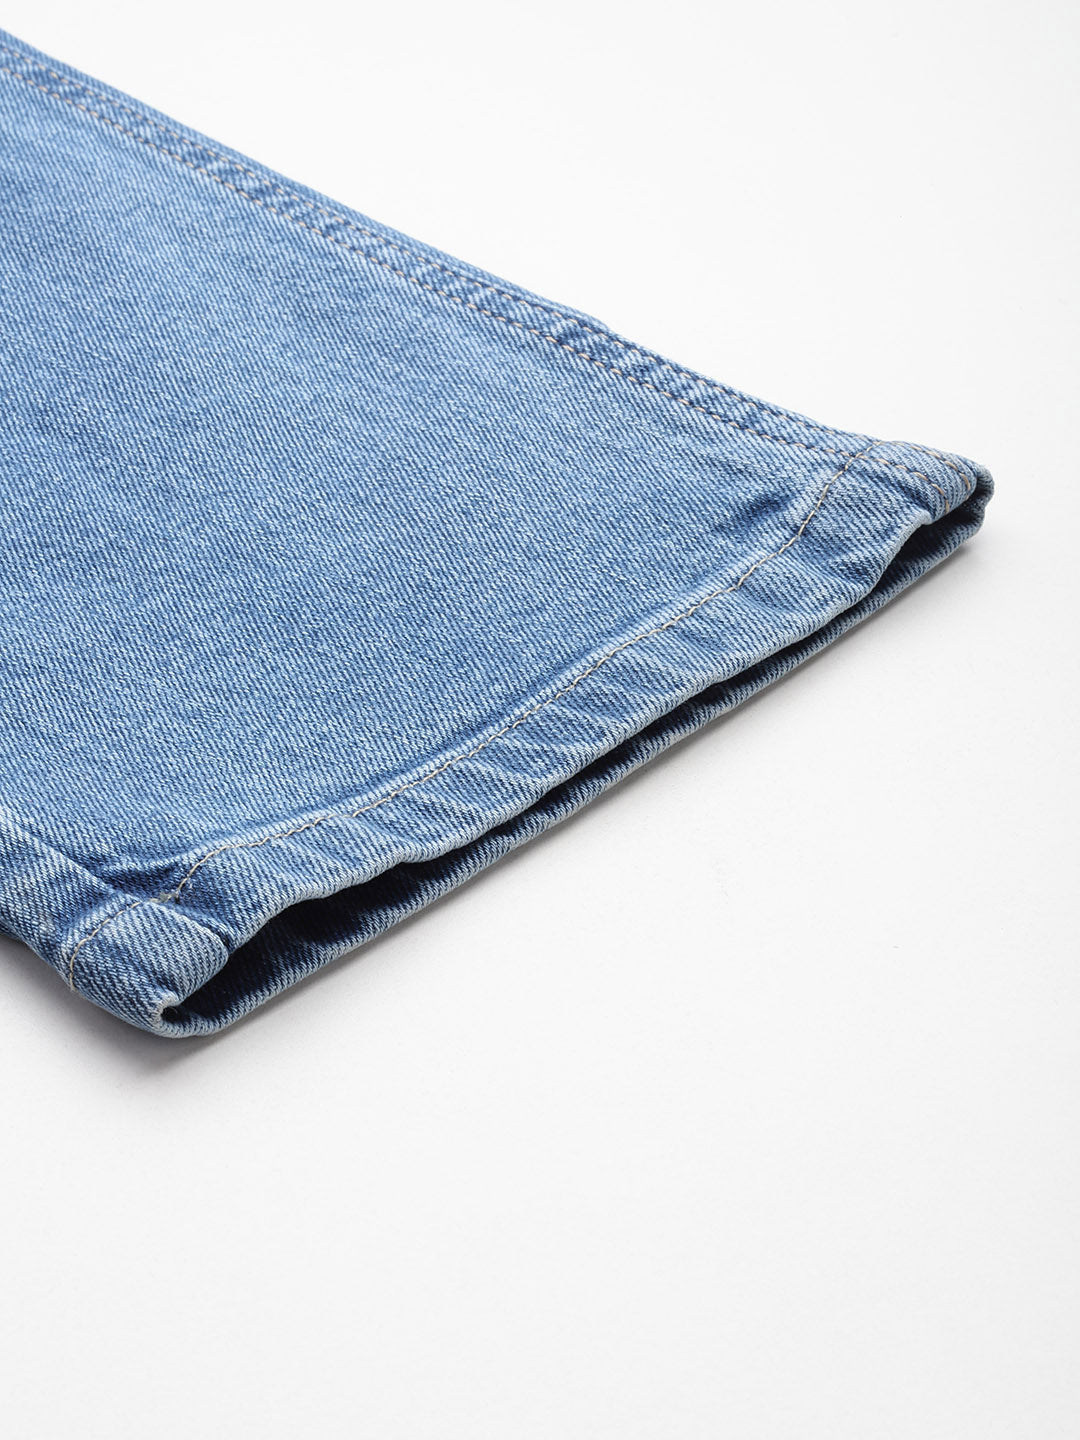 Men Blue Mid Rise Regular Fit Light Fade Stretchable Cotton Jeans